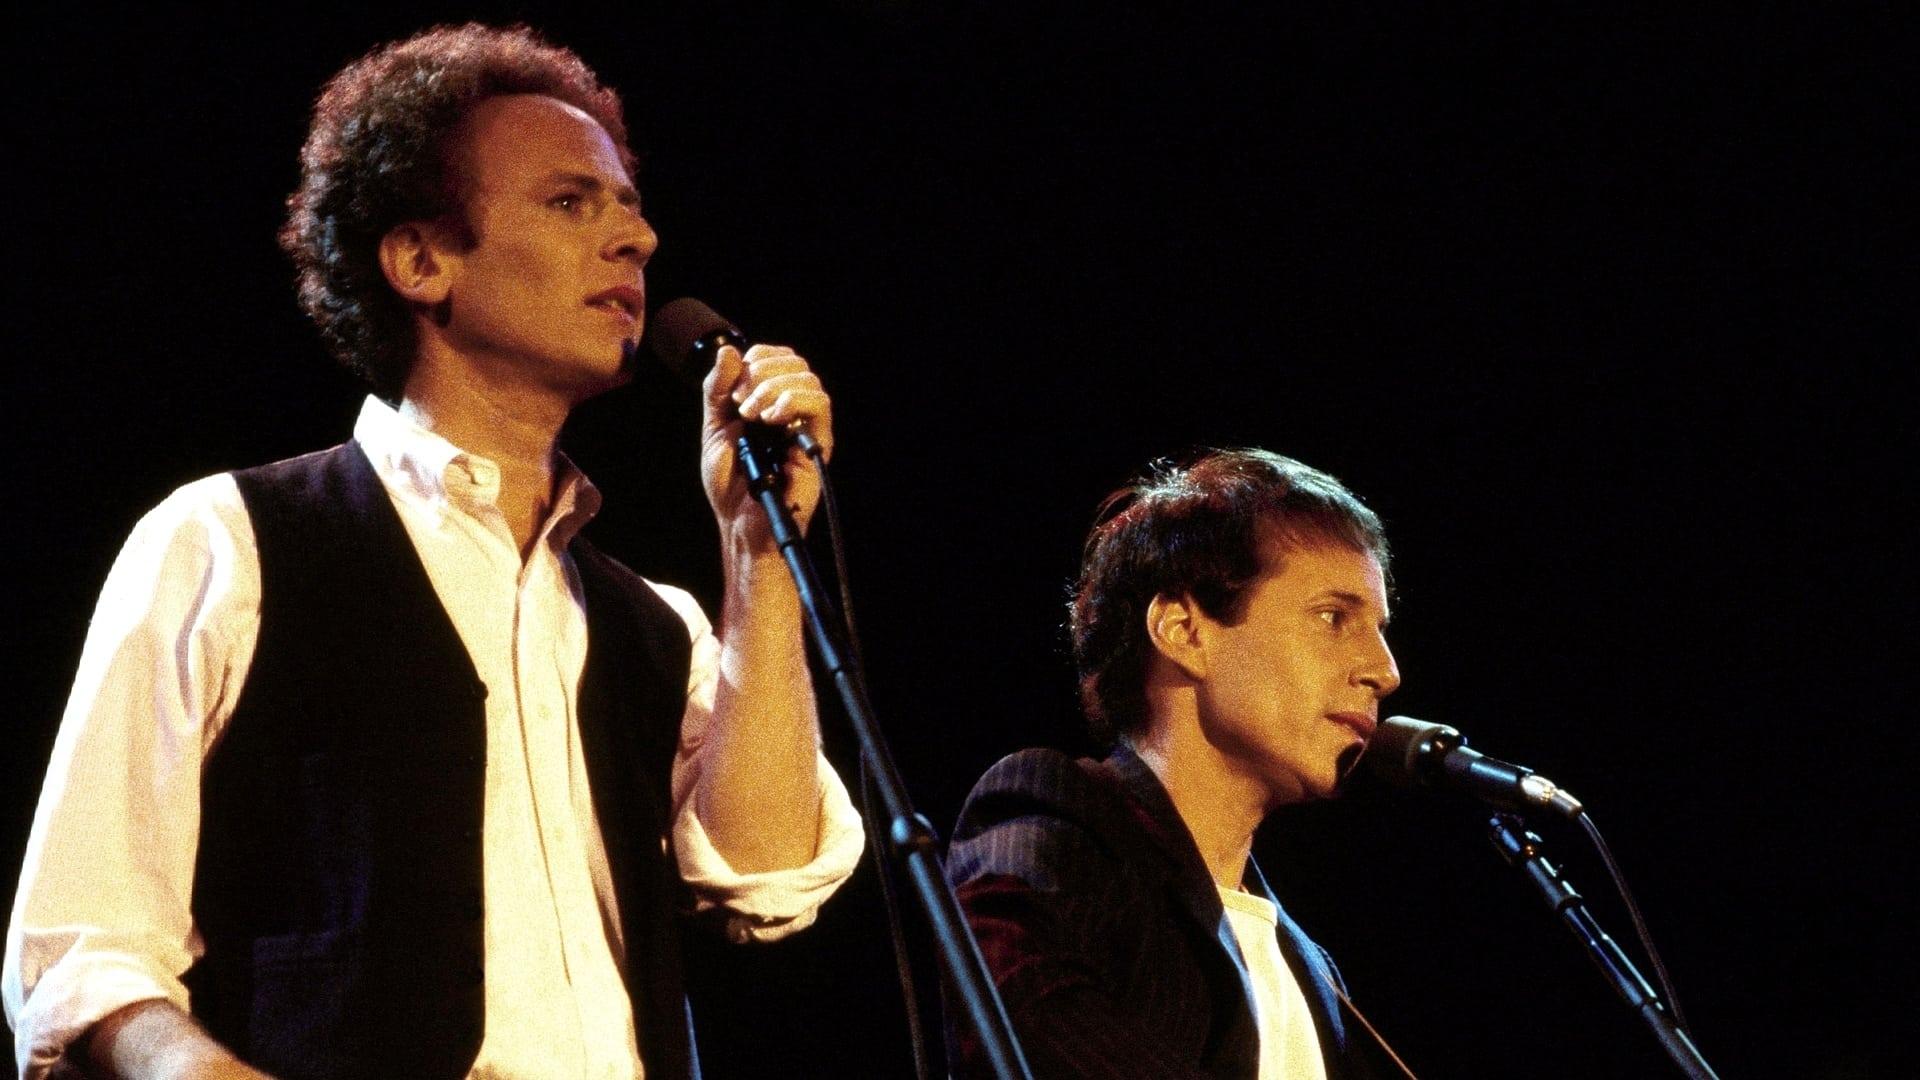 Simon & Garfunkel: The Concert in Central Park backdrop